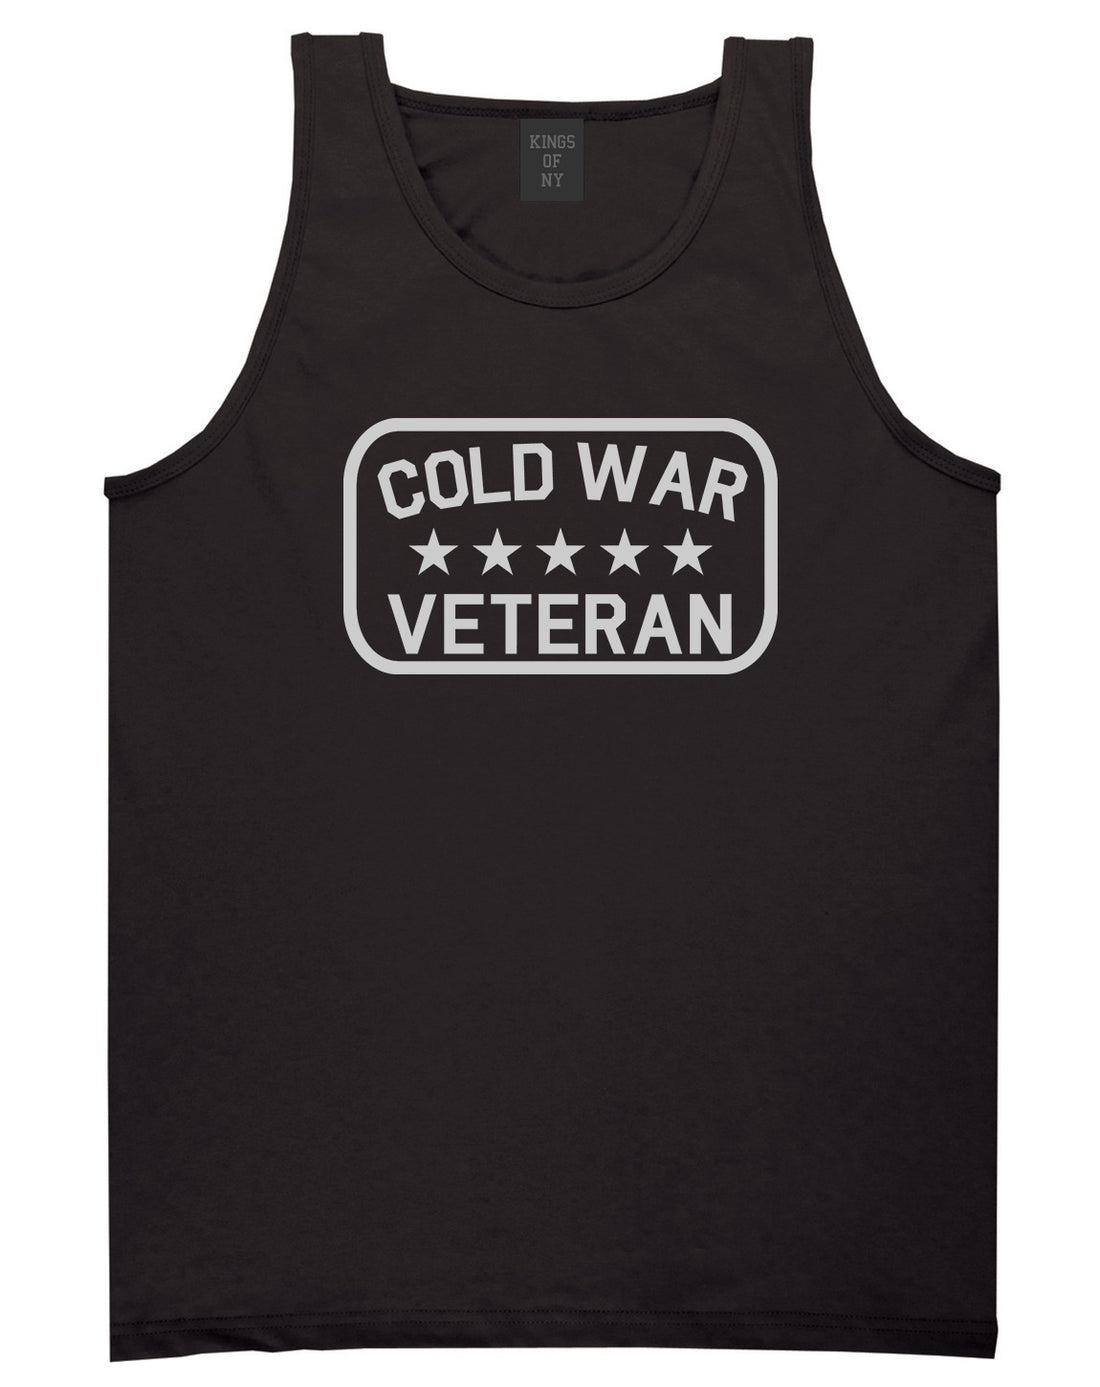 Cold War Veteran Mens Tank Top Shirt Black